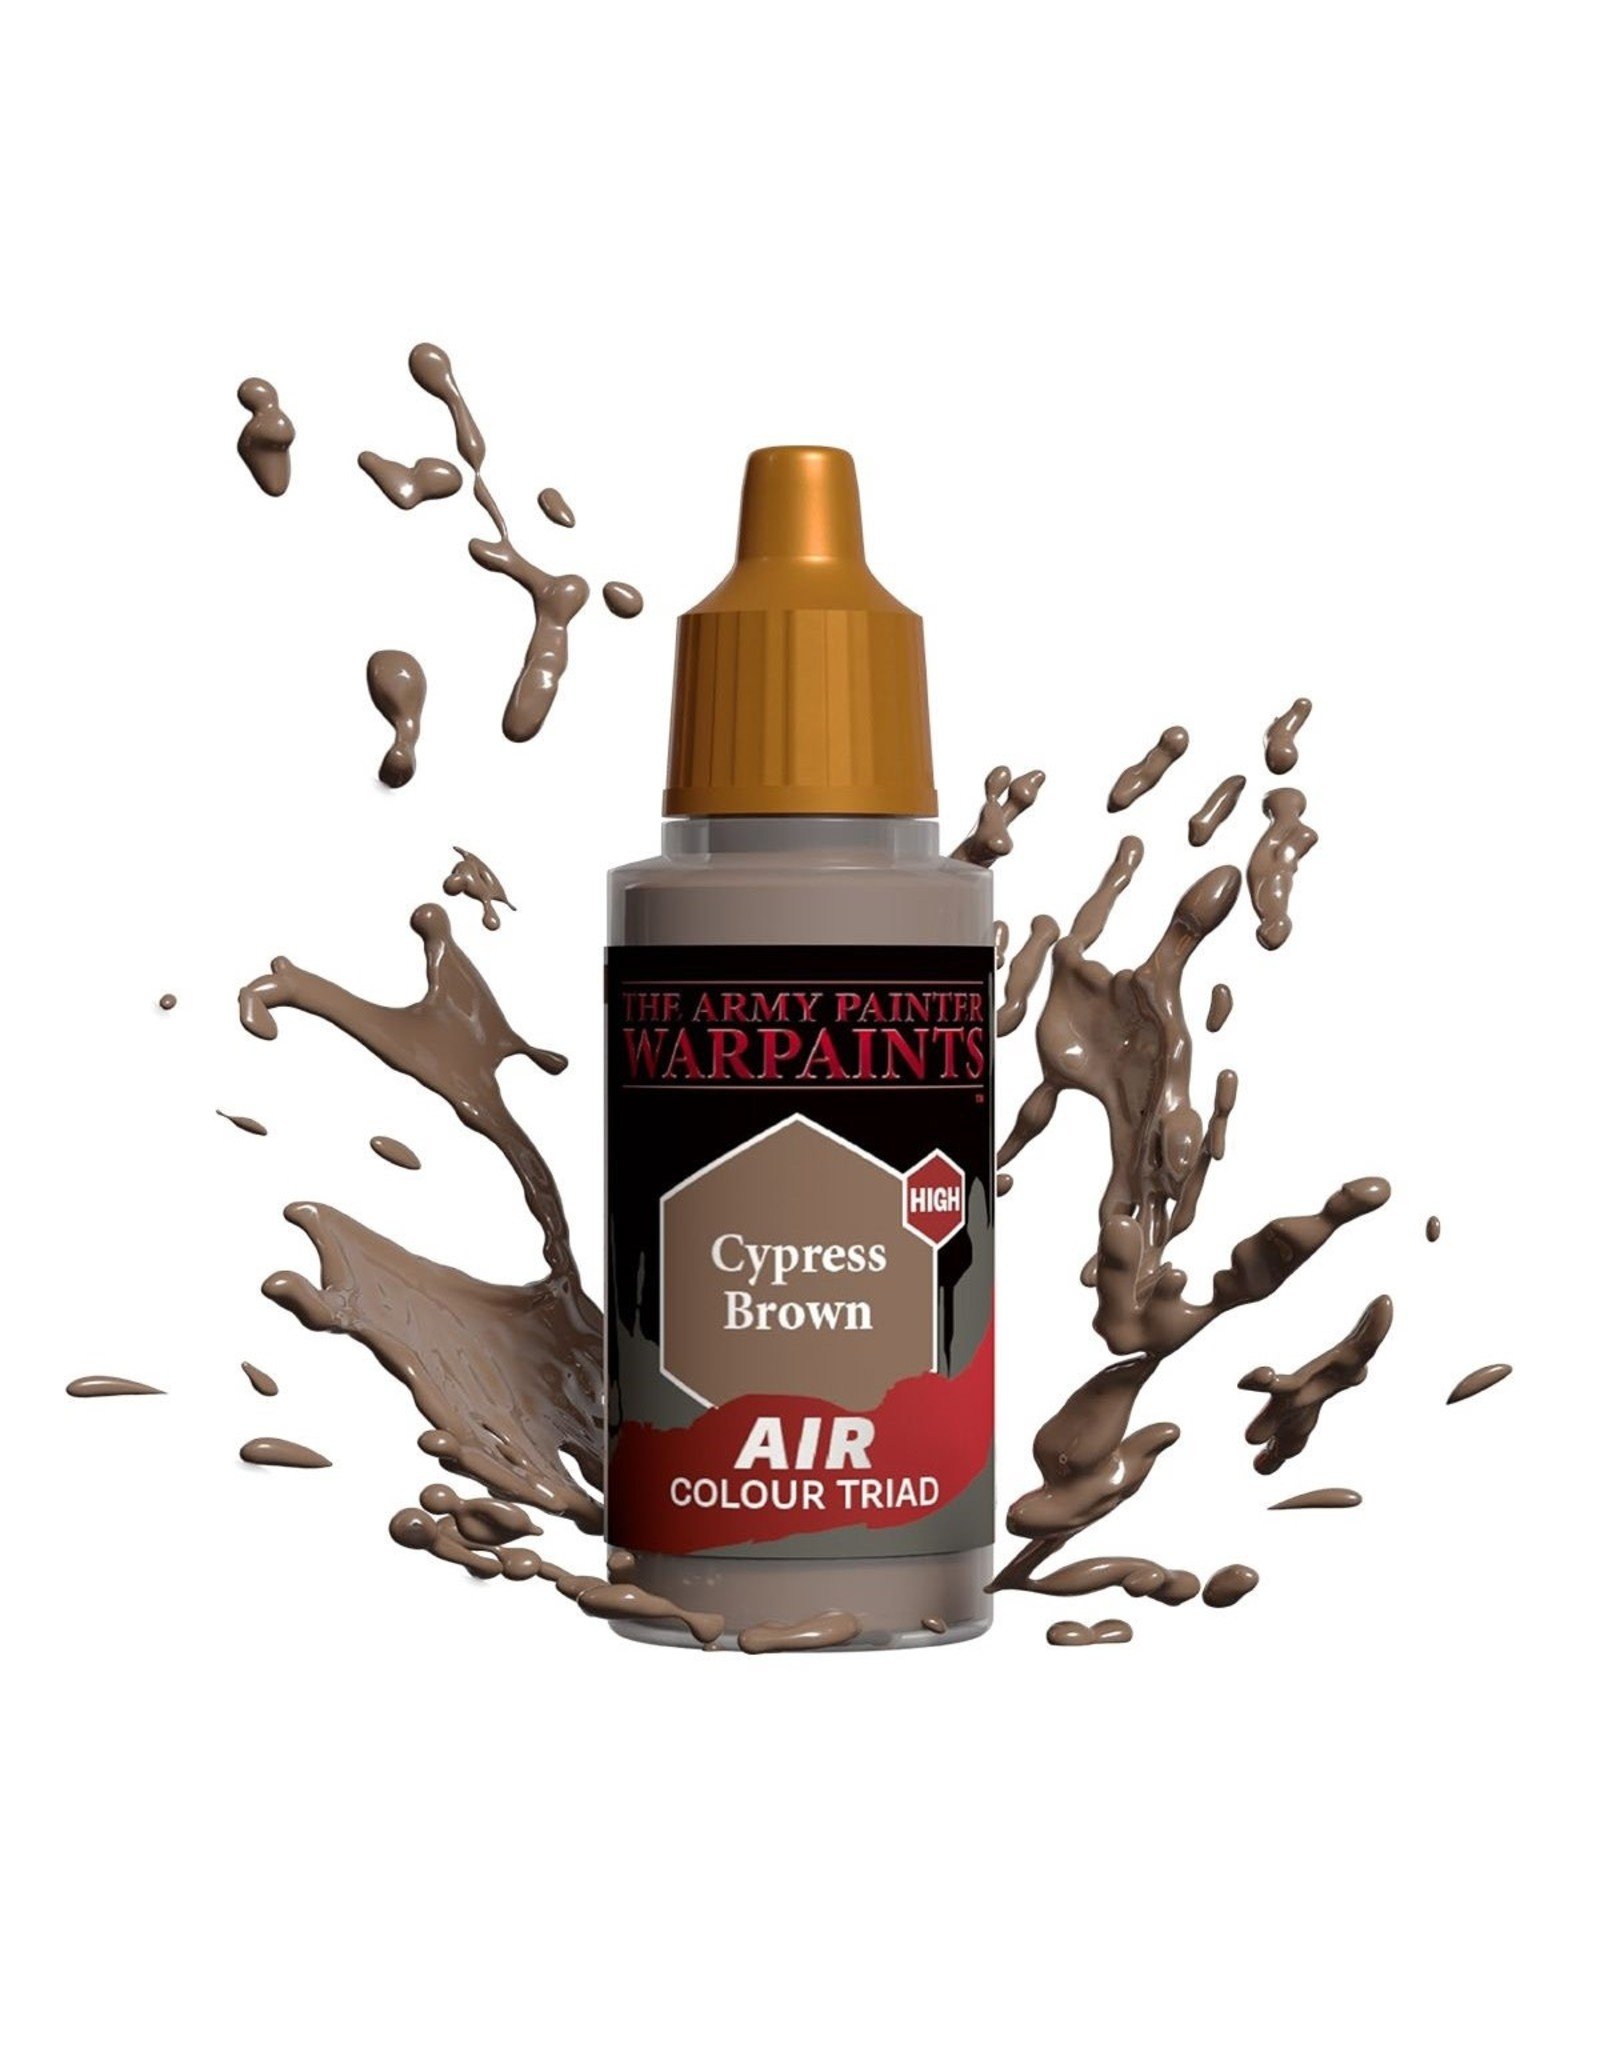 The Army Painter Warpaint Air: Cypress Brown (18ml)